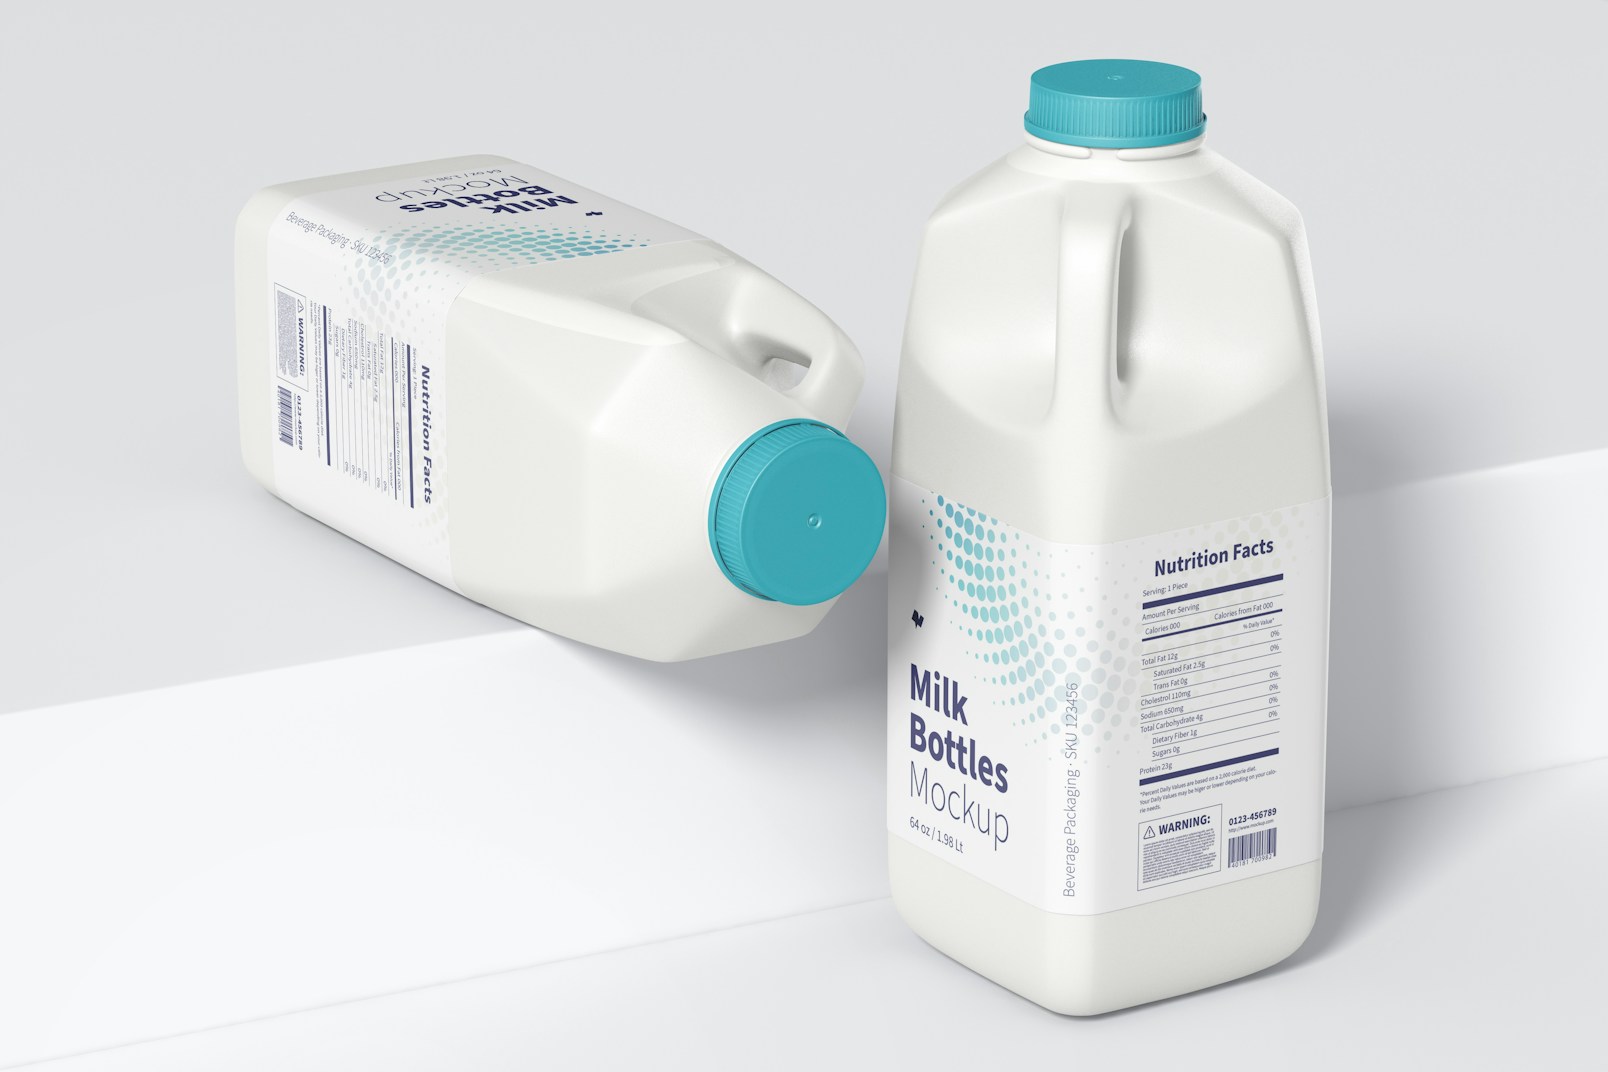 64 oz Milk Bottles Mockup, Perspective View